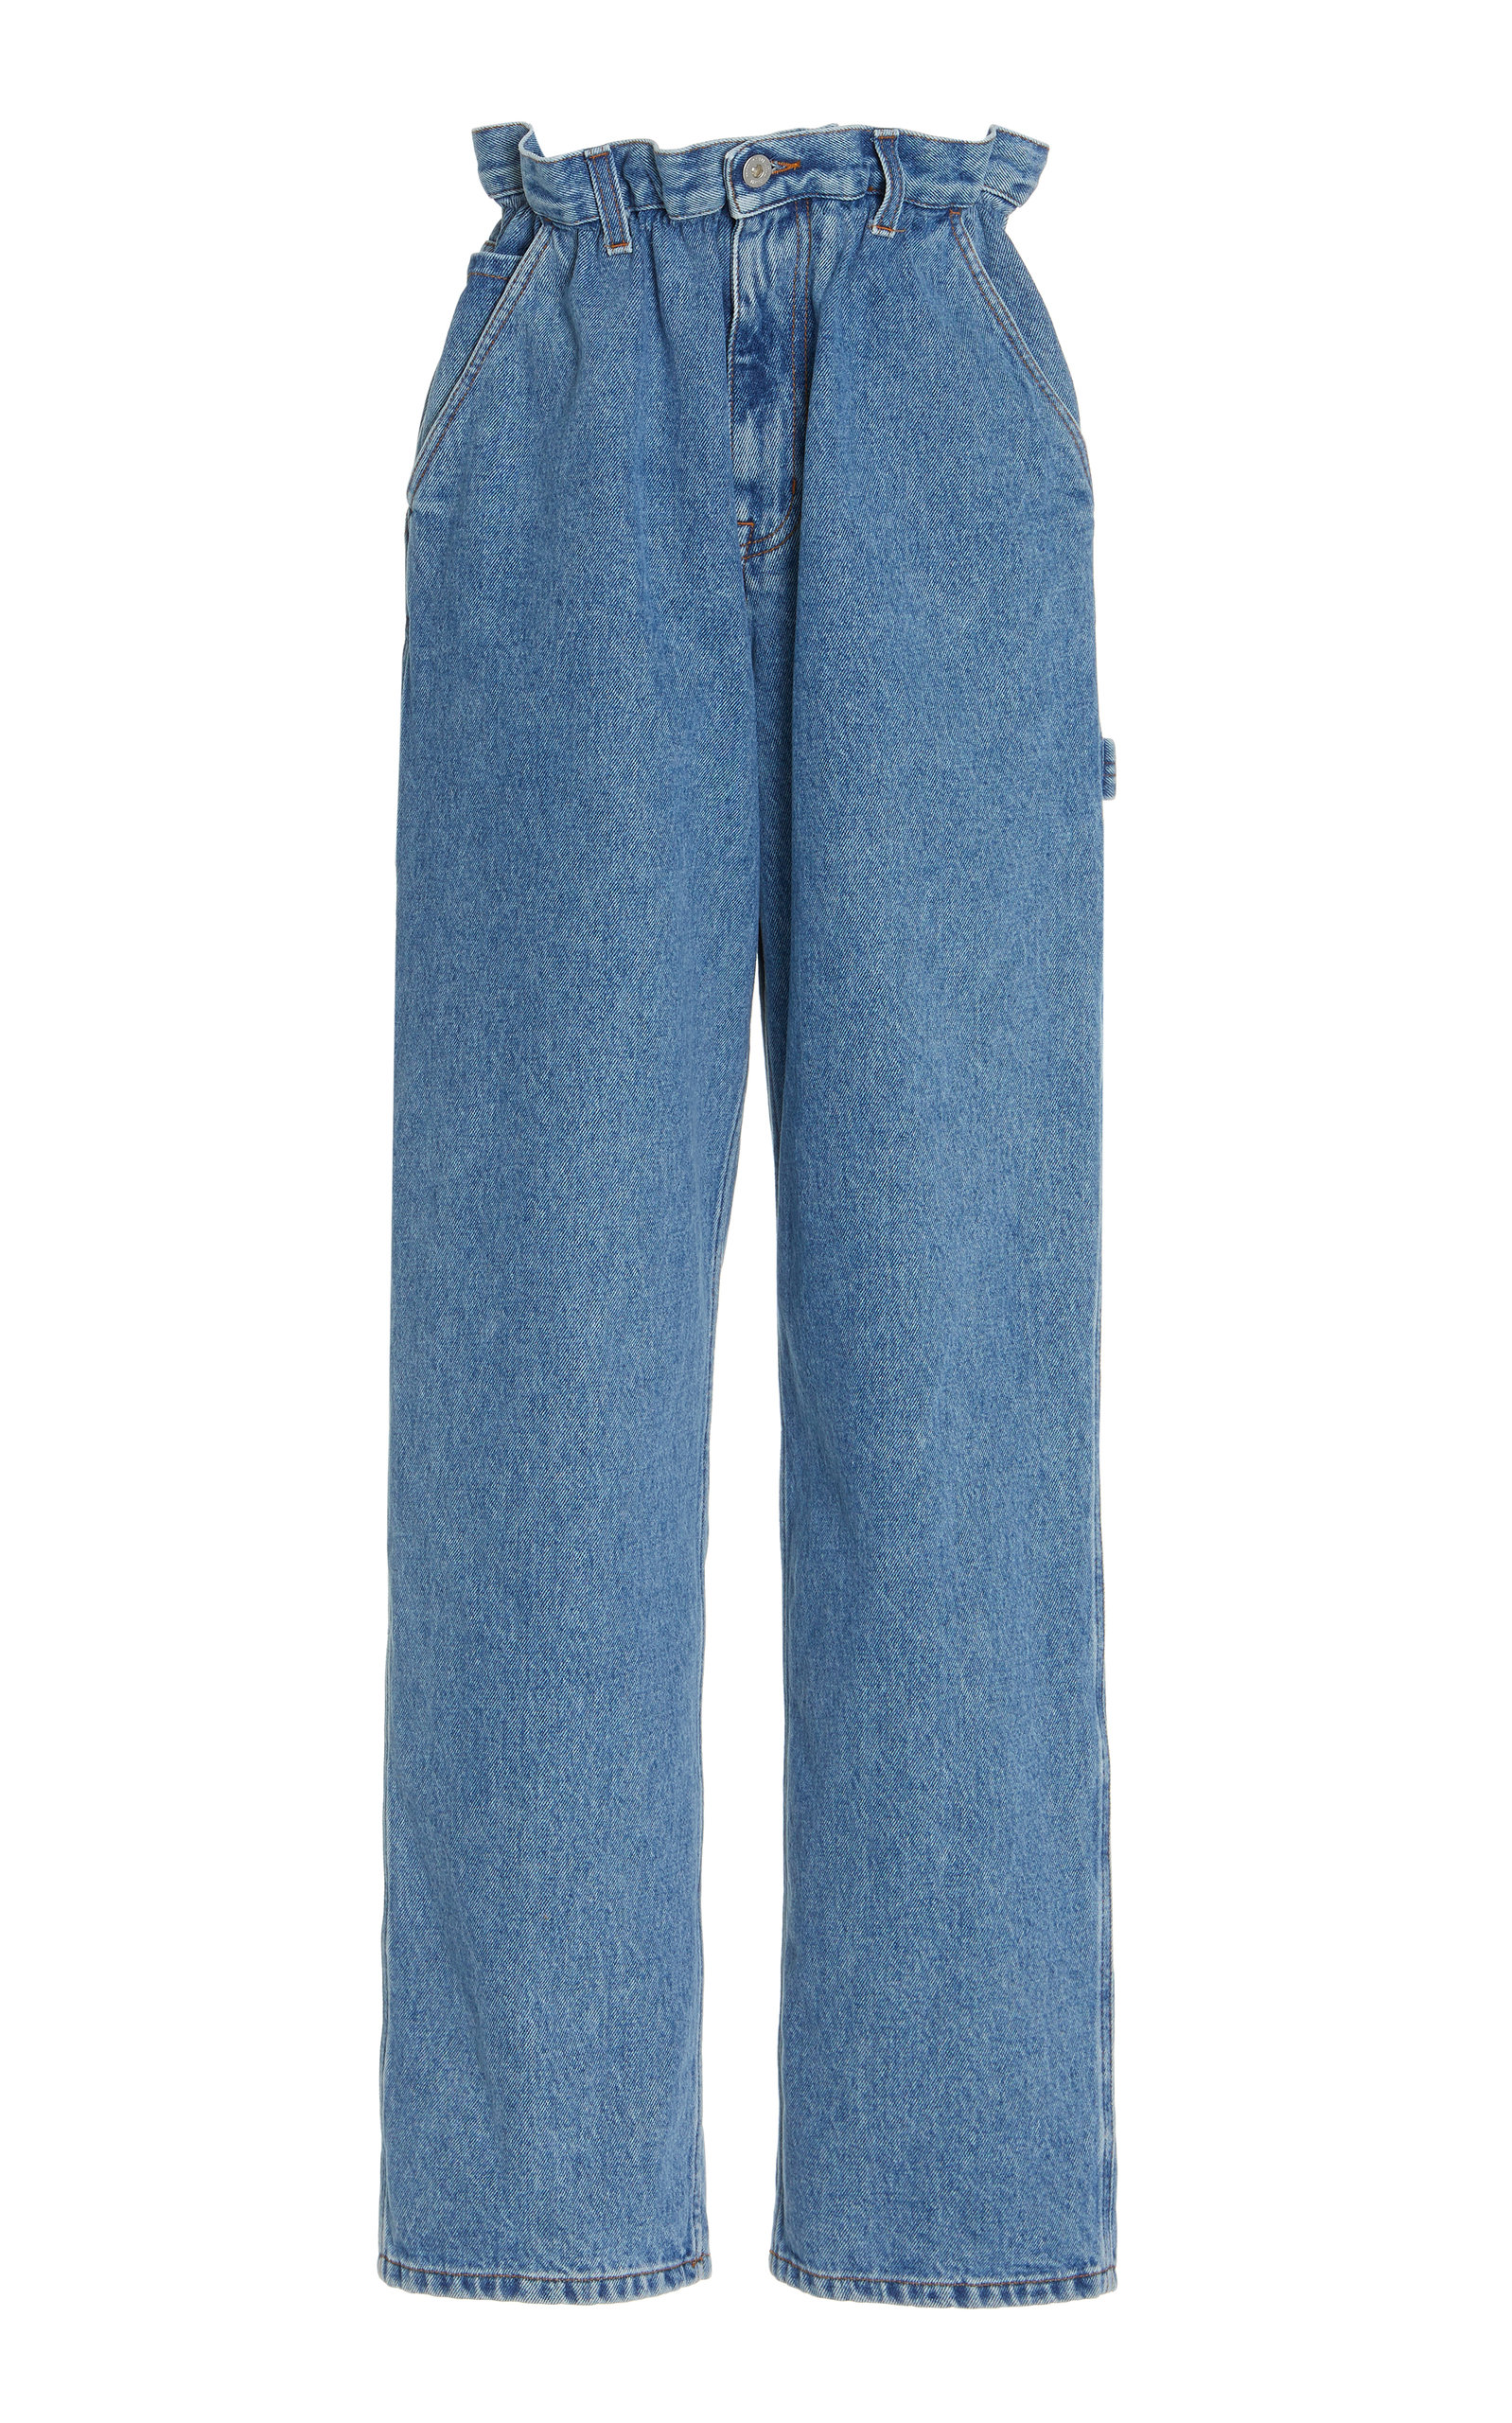 Miu Miu - Women's Iconic Rigid High-Rise Straight-Leg Blue Jeans - Medium Wash - 29 - Moda Operandi